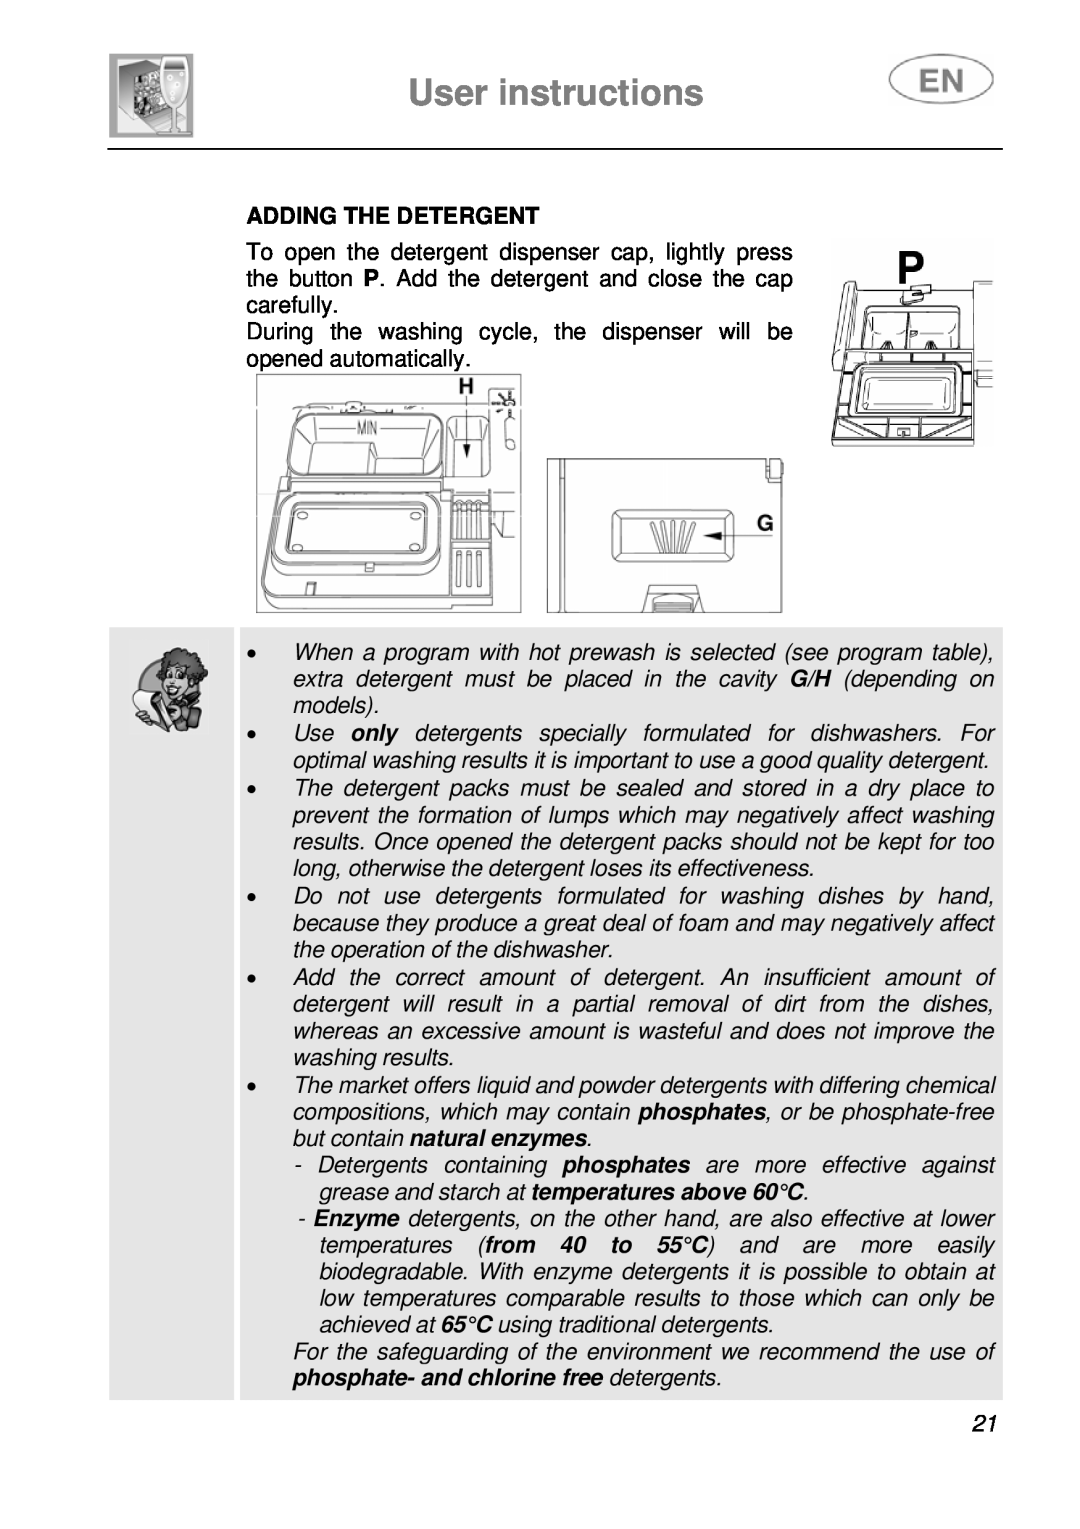 Smeg LS19-7 instruction manual User instructions, Adding The Detergent 